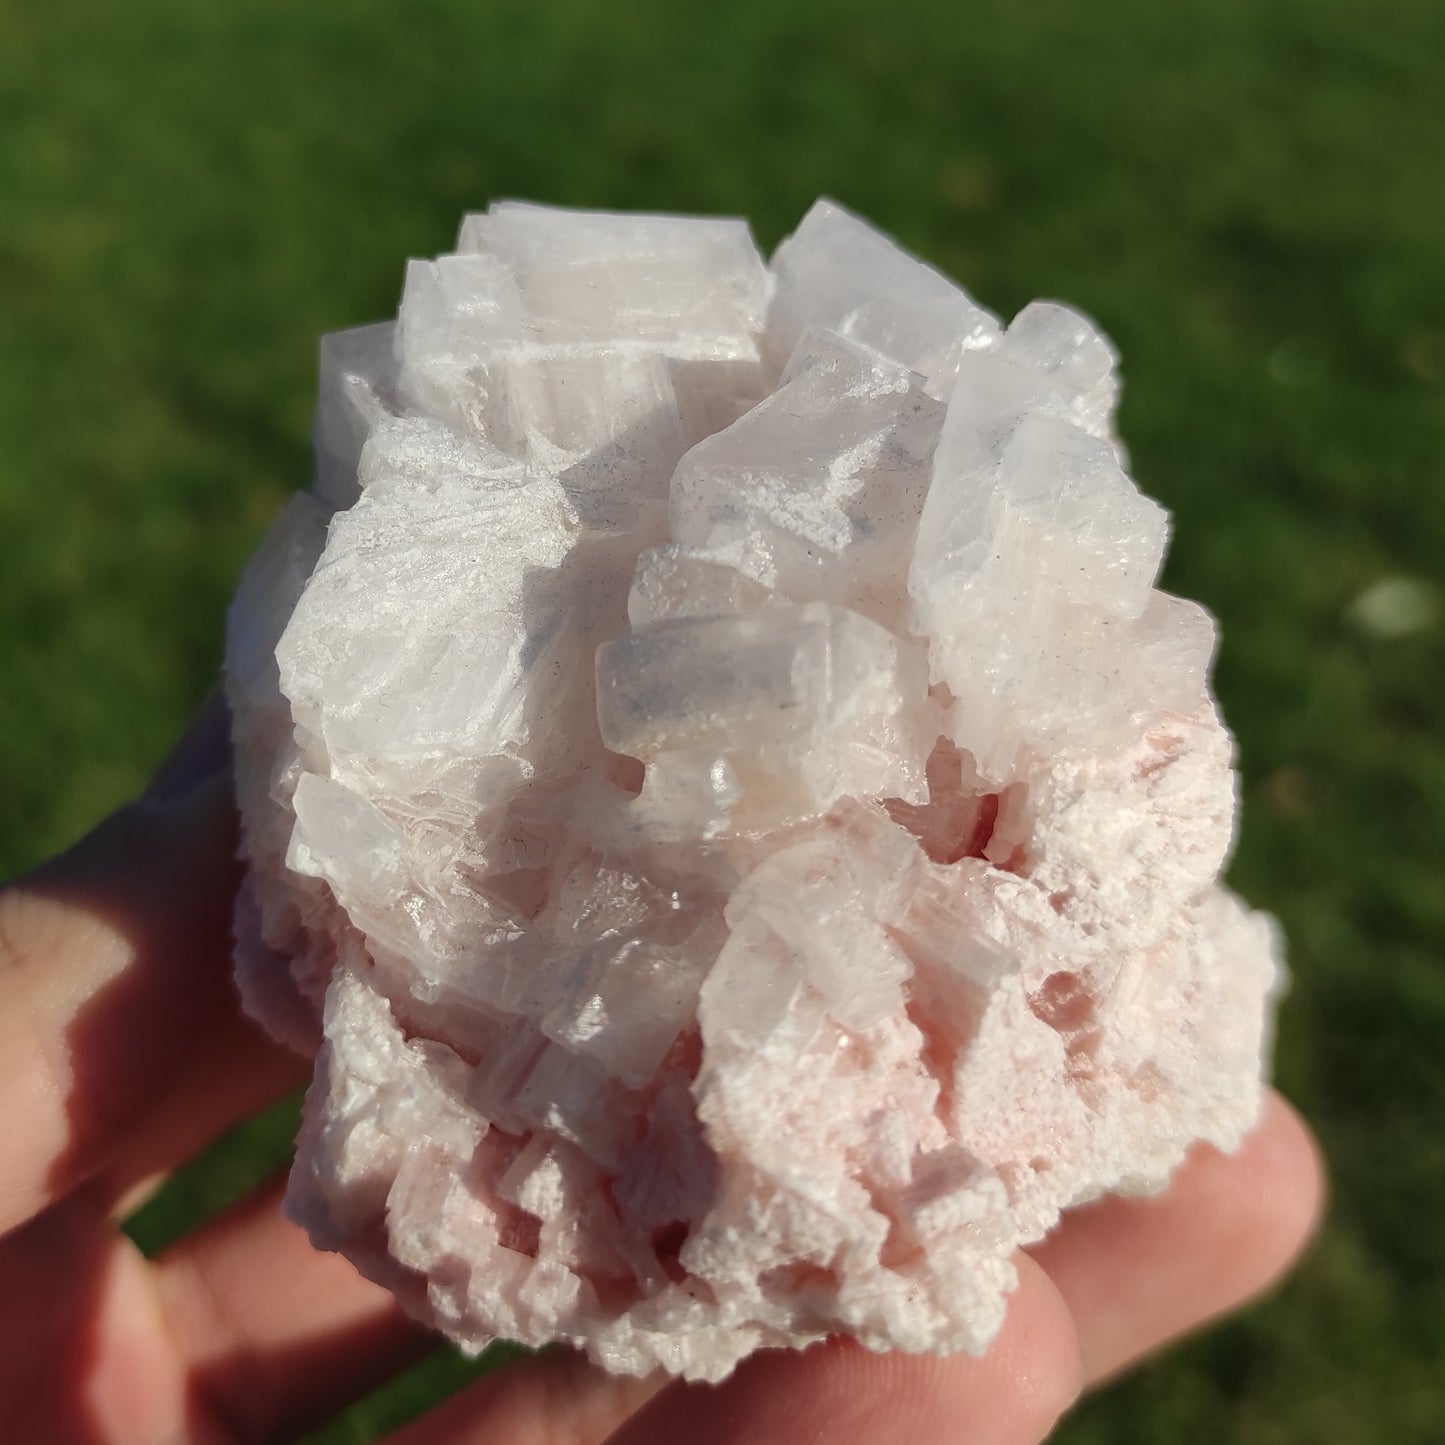 178g Pink Halite Salt from California